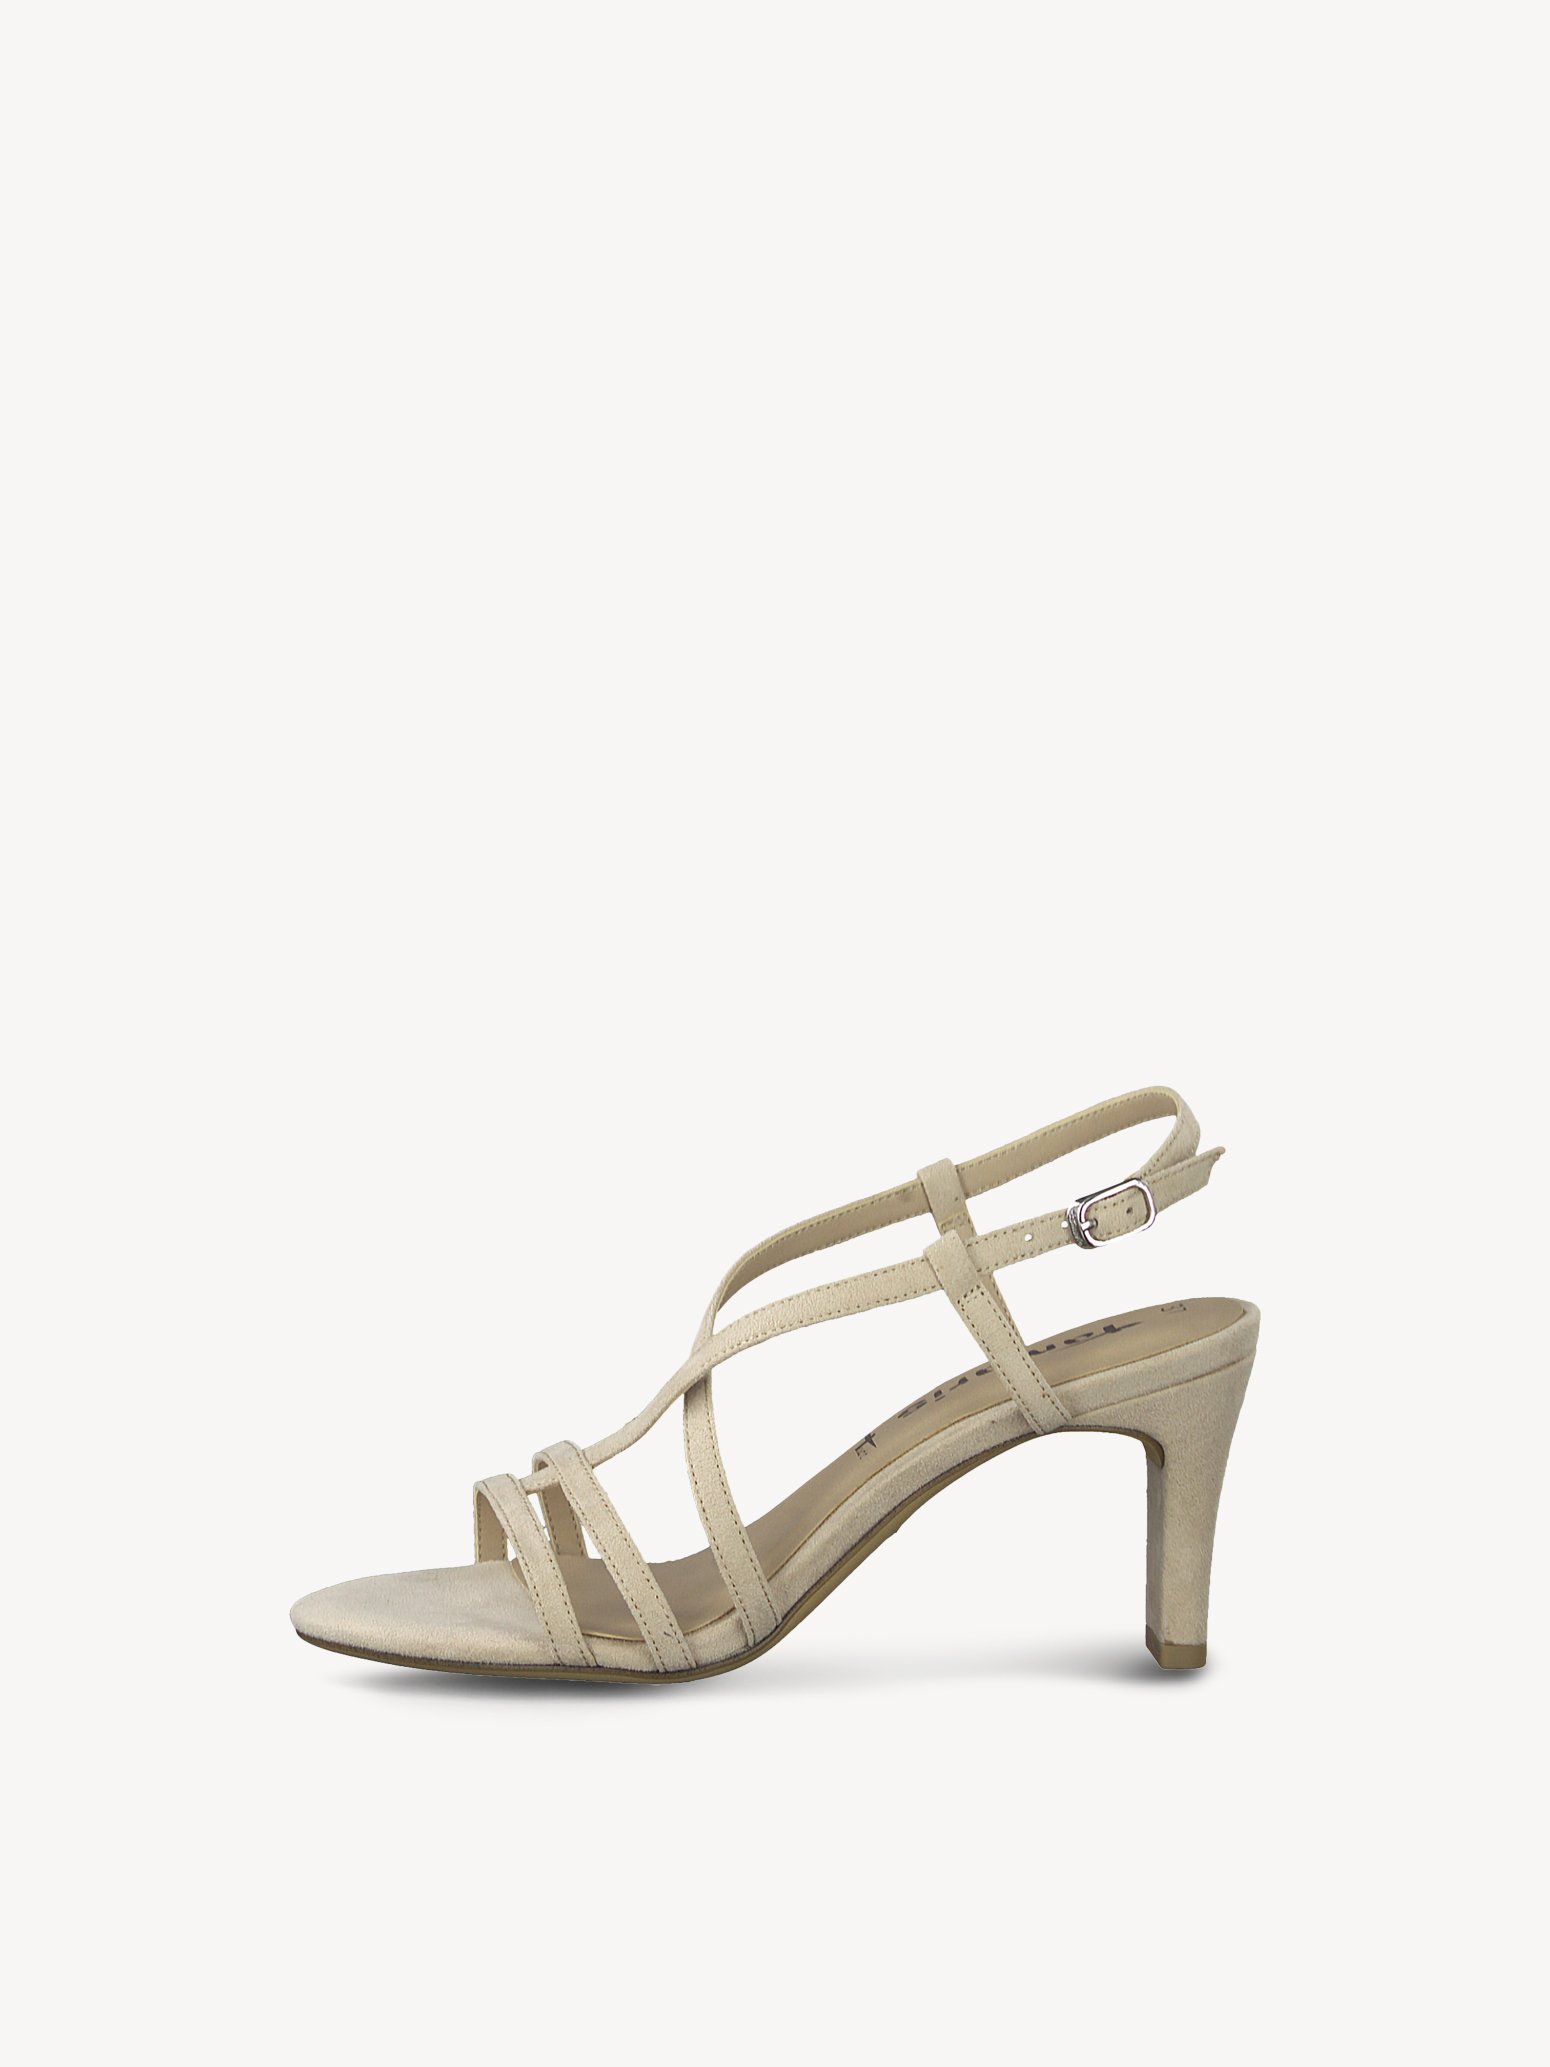 Heeled sandal 1-1-28345-28: Buy Tamaris Sandals online!